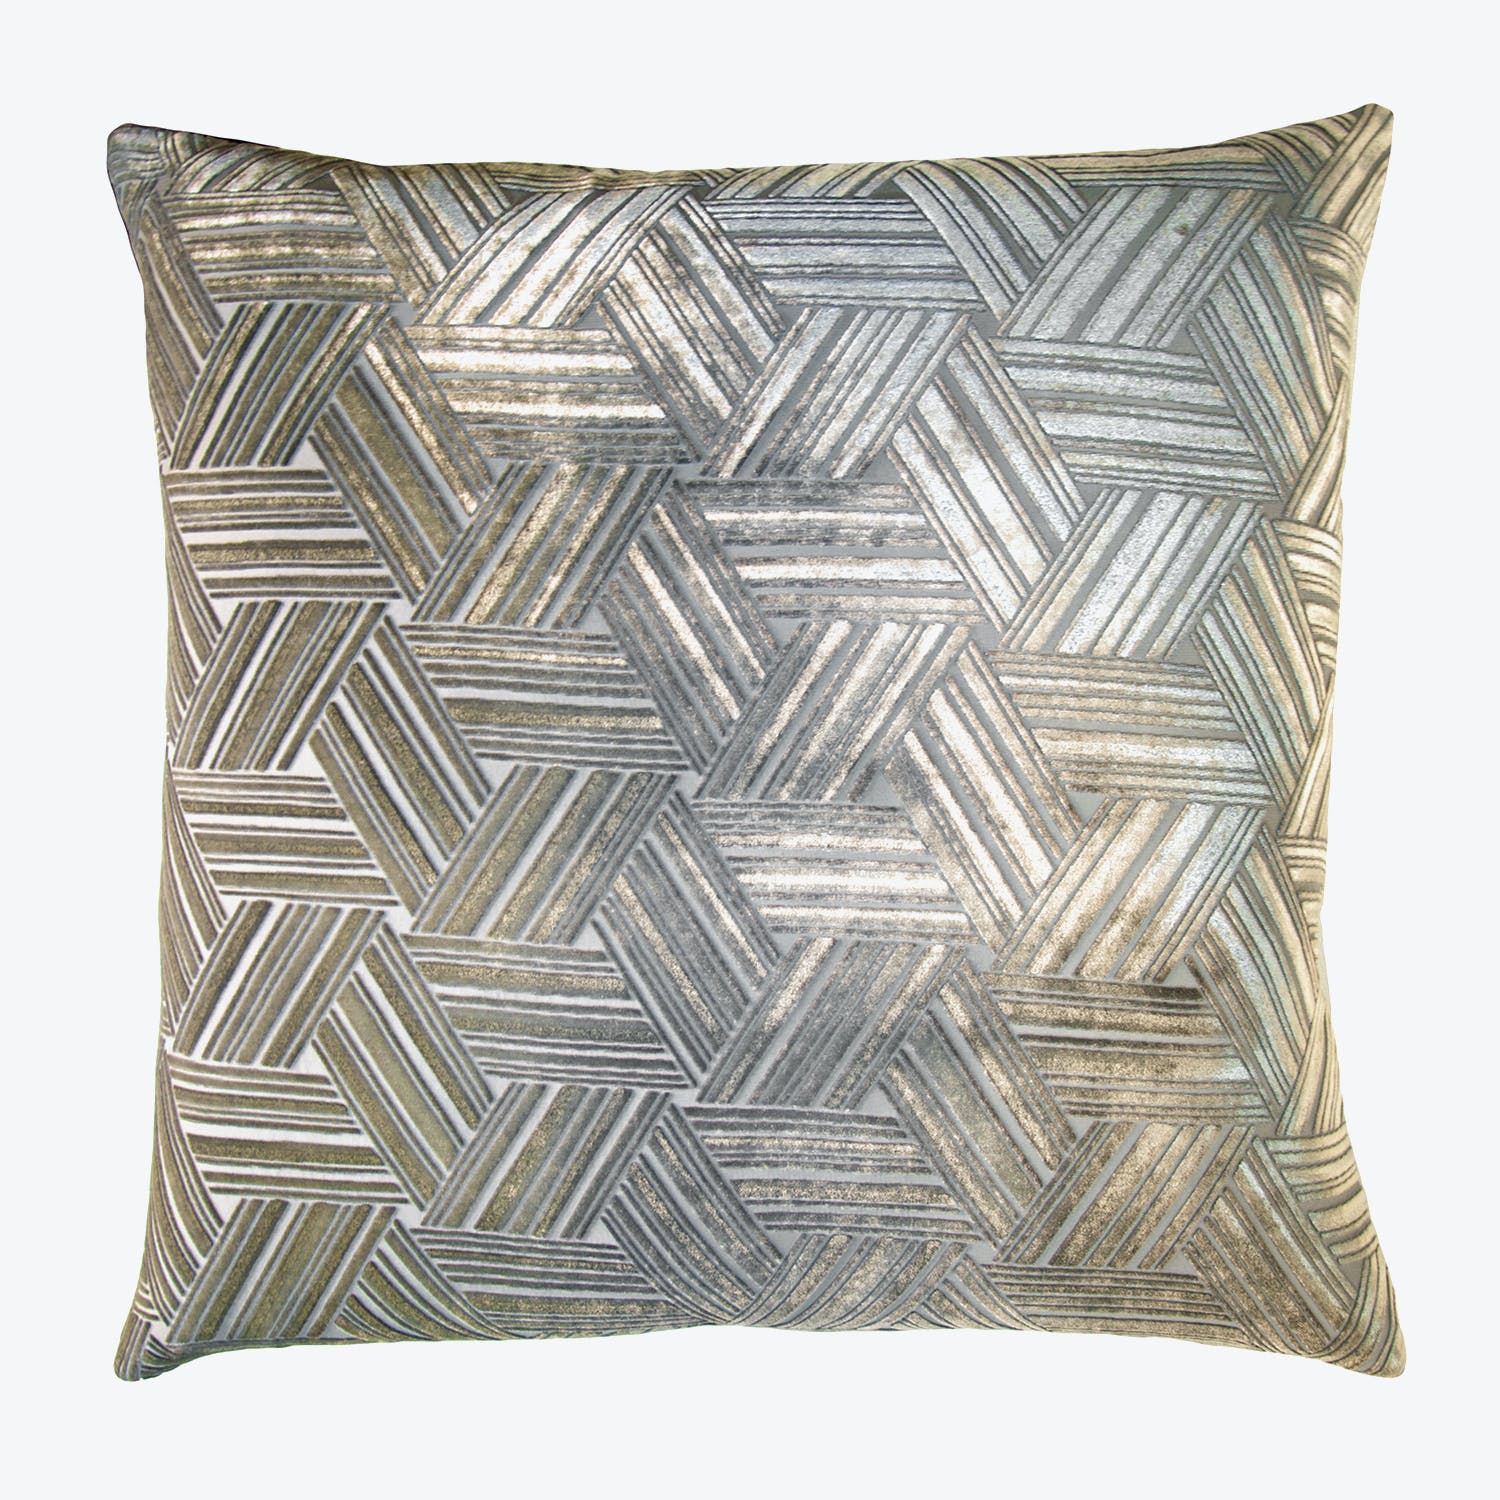 Square decorative pillow with geometric herringbone pattern in metallic gray.